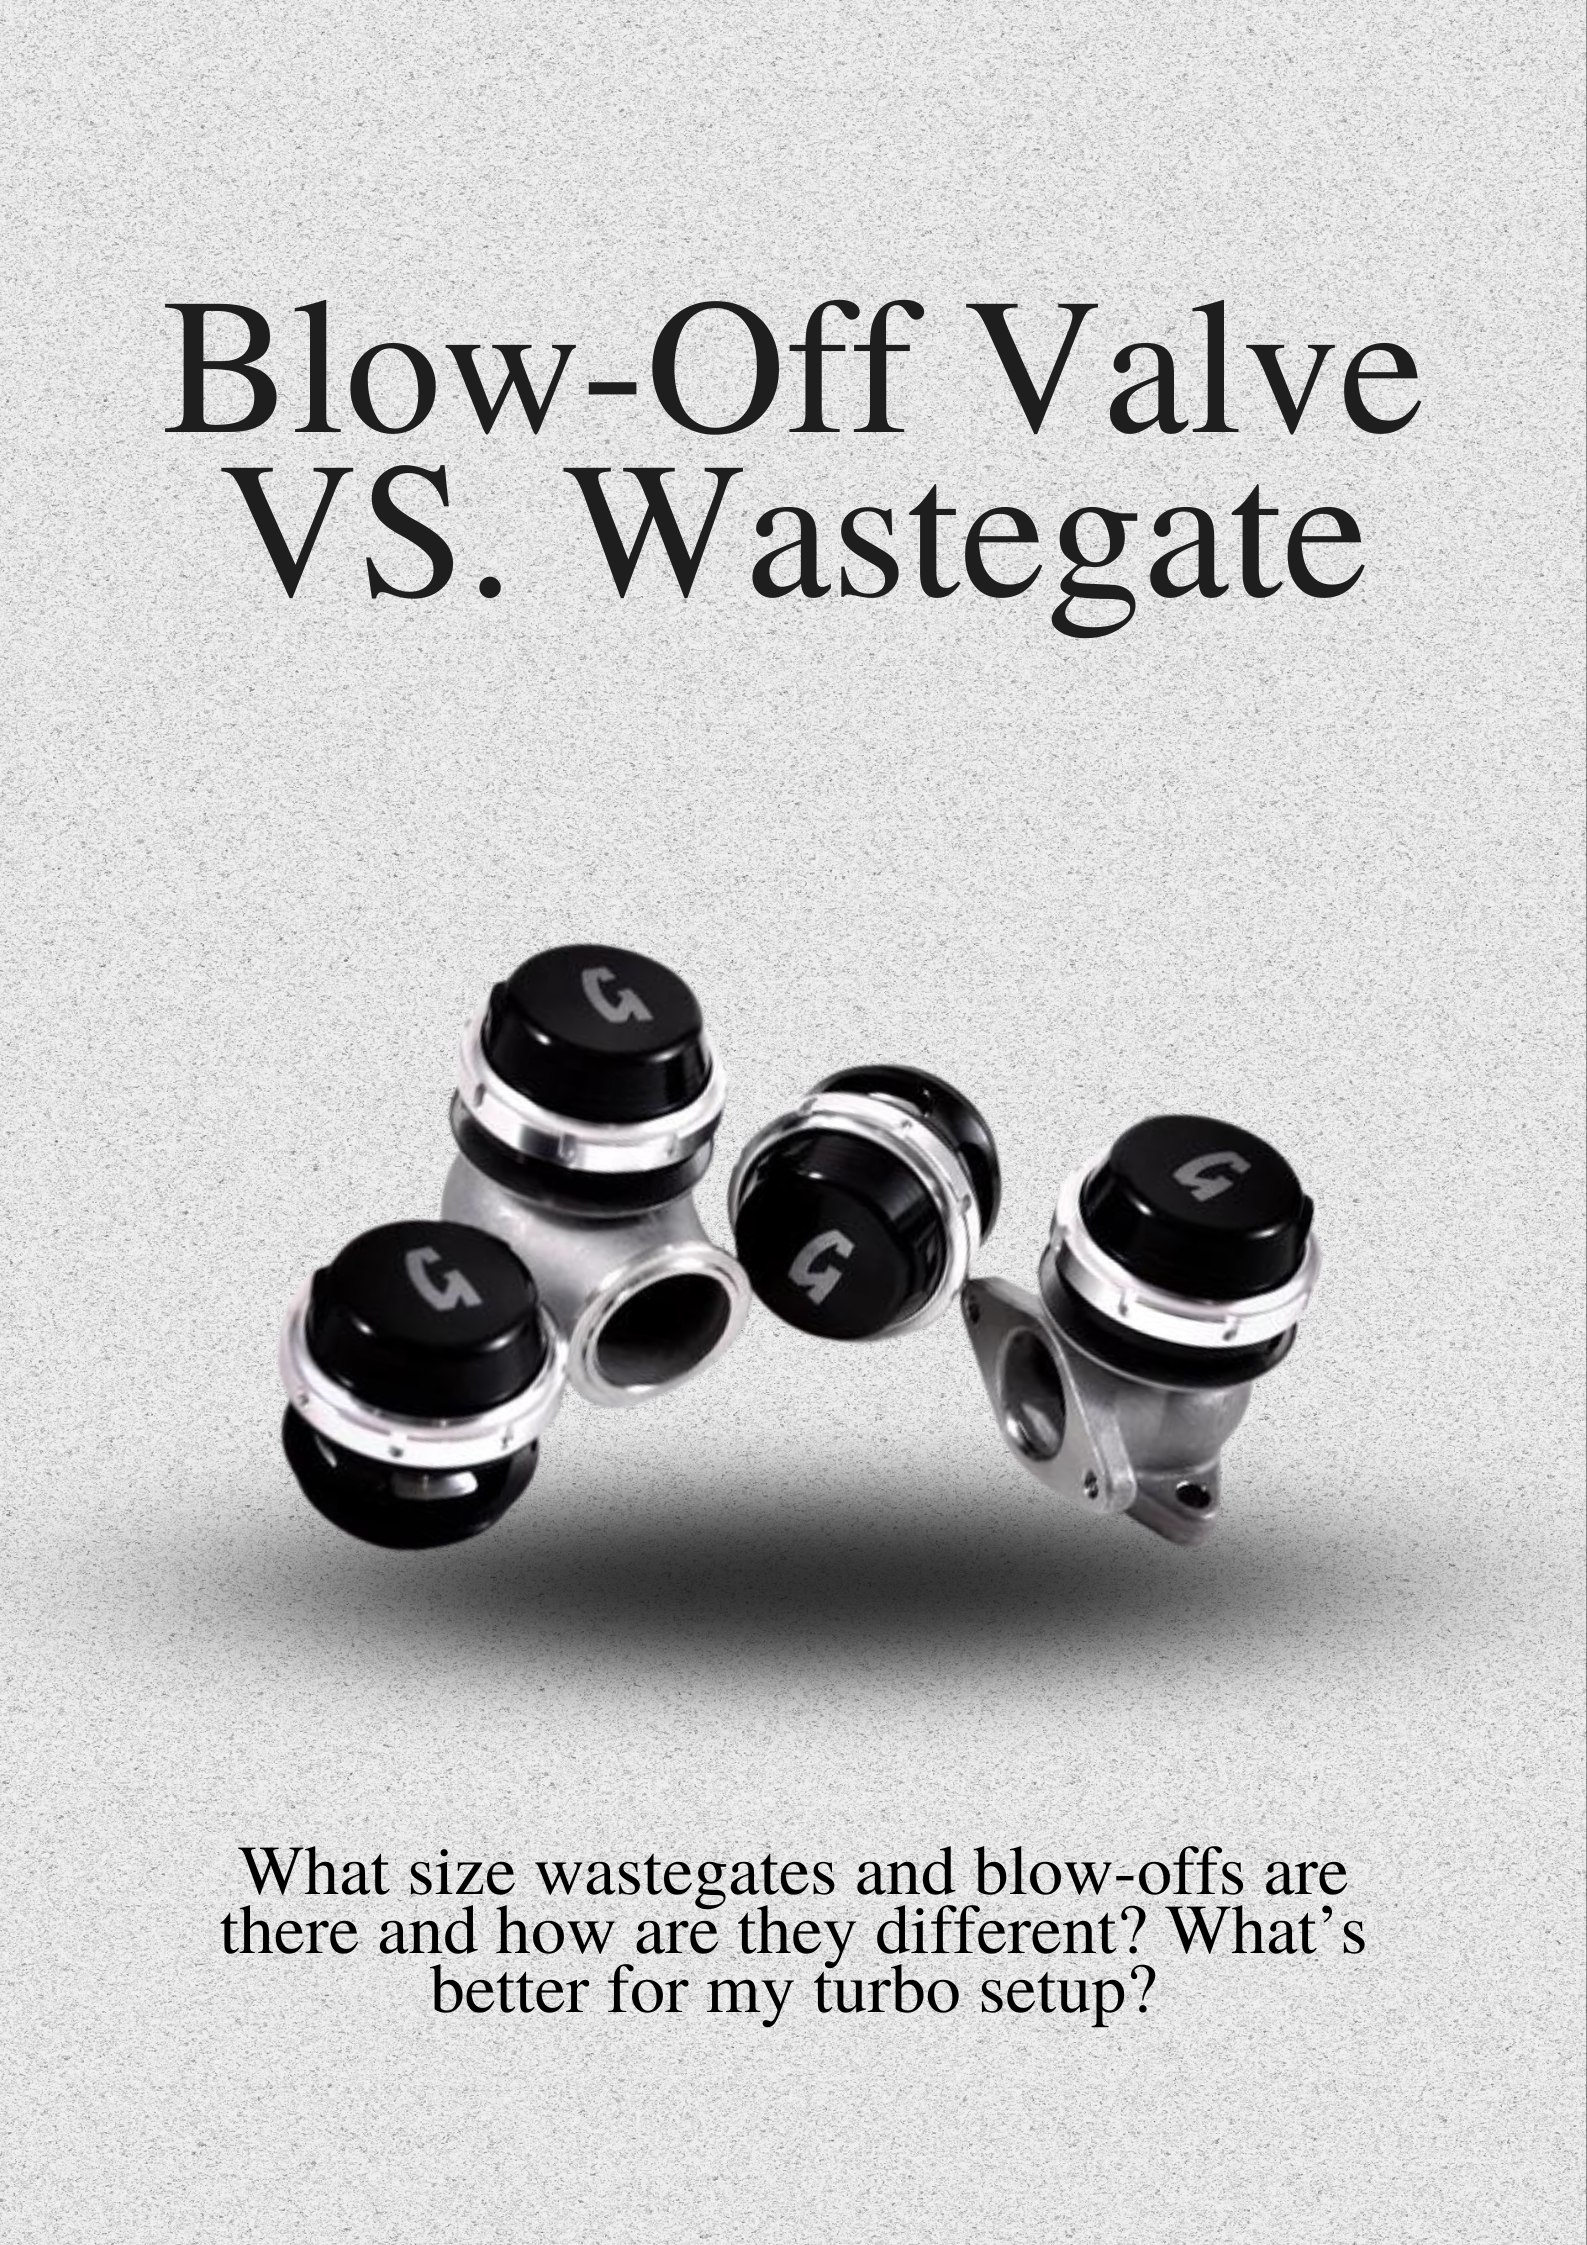 Blow-Off Valve VS. Wastegate